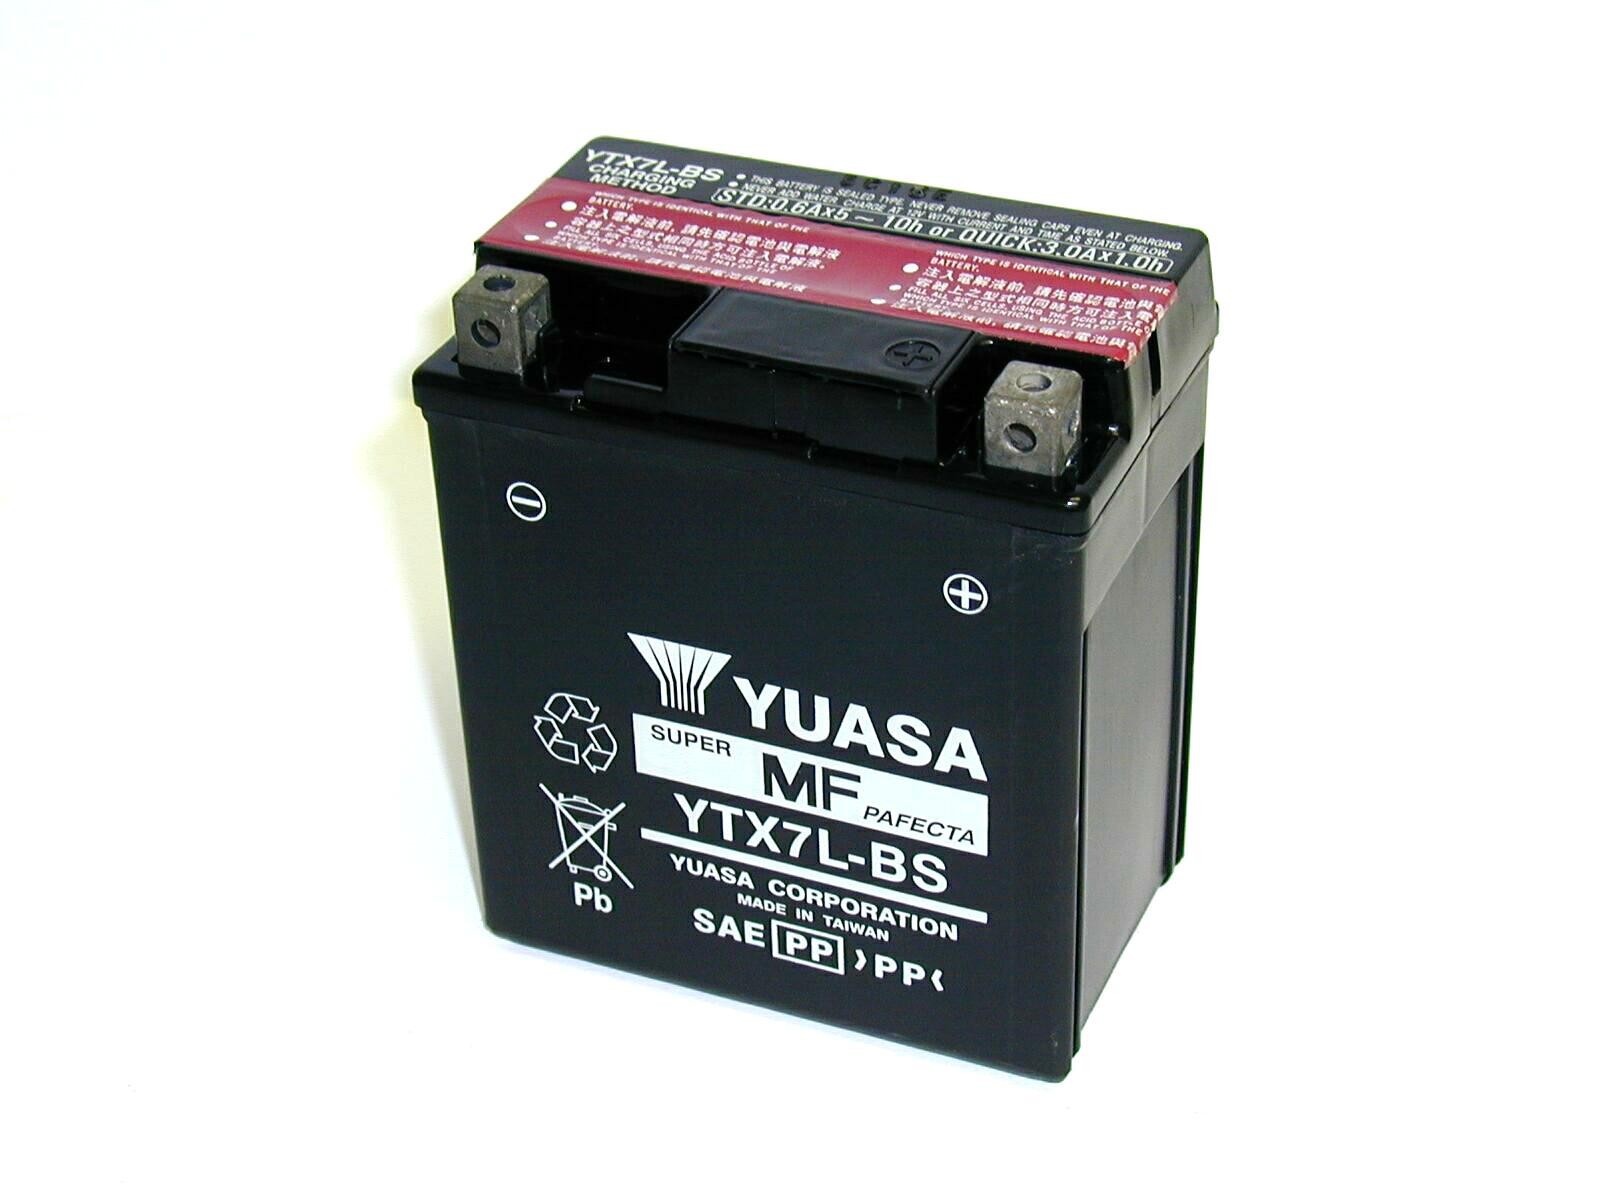 Batterie moto Yuasa 12V 6Ah sans entretien YTX7L-BS / GTX7L-BS / YTX7L -  Batteries Moto